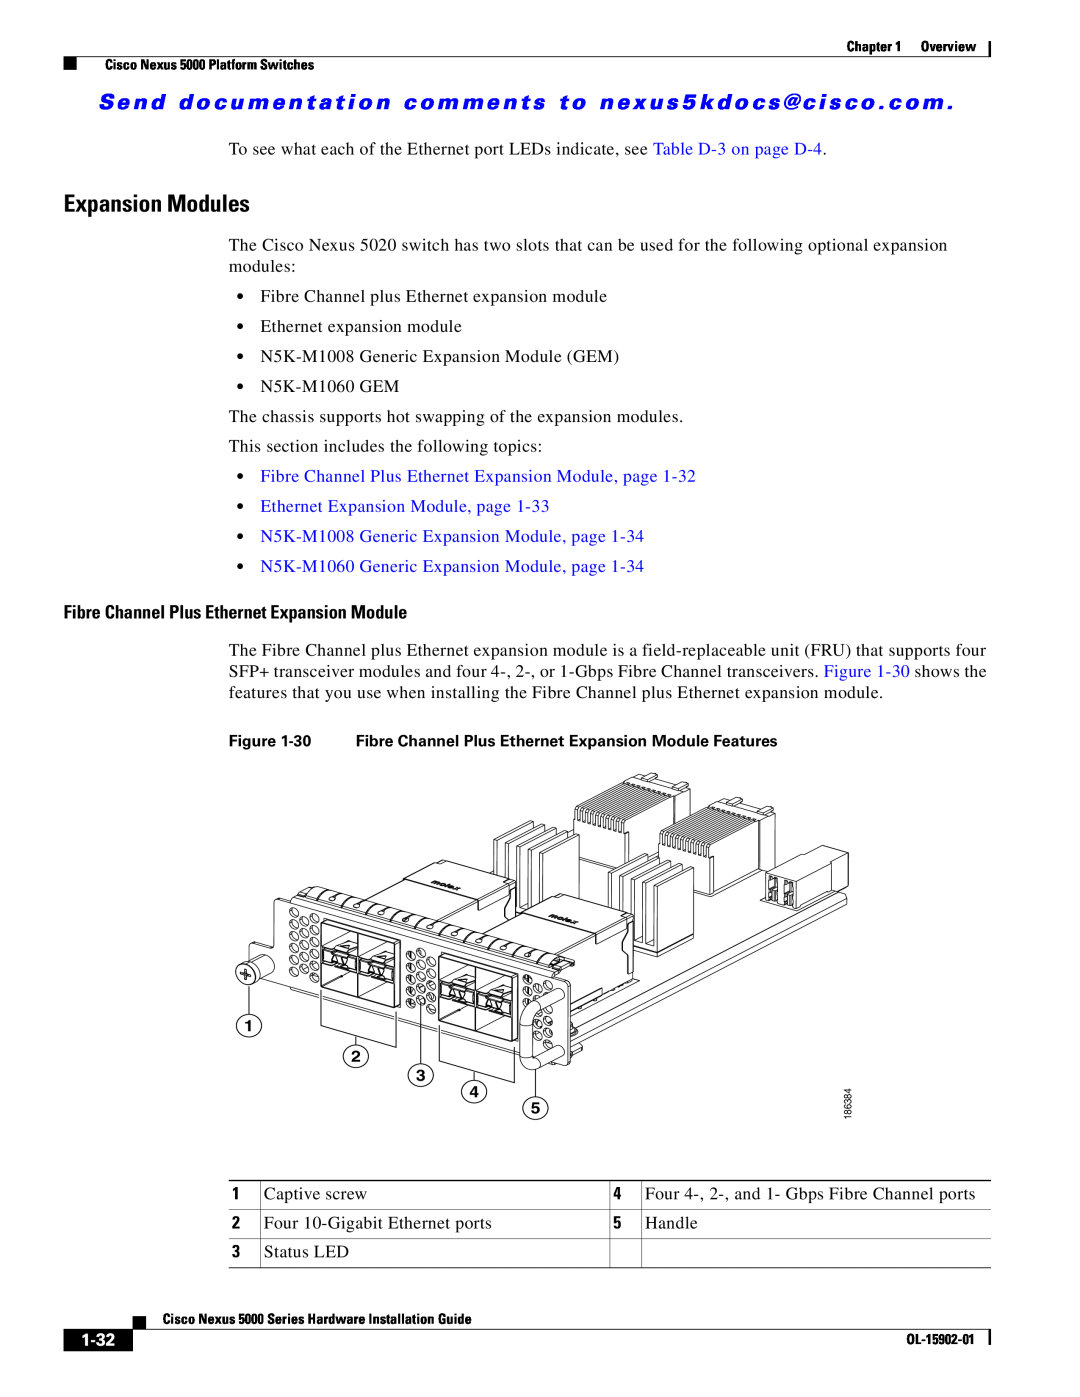 Cisco Systems 5000 Expansion Modules, Fibre Channel Plus Ethernet Expansion Module, Ethernet Expansion Module, page, 1-32 